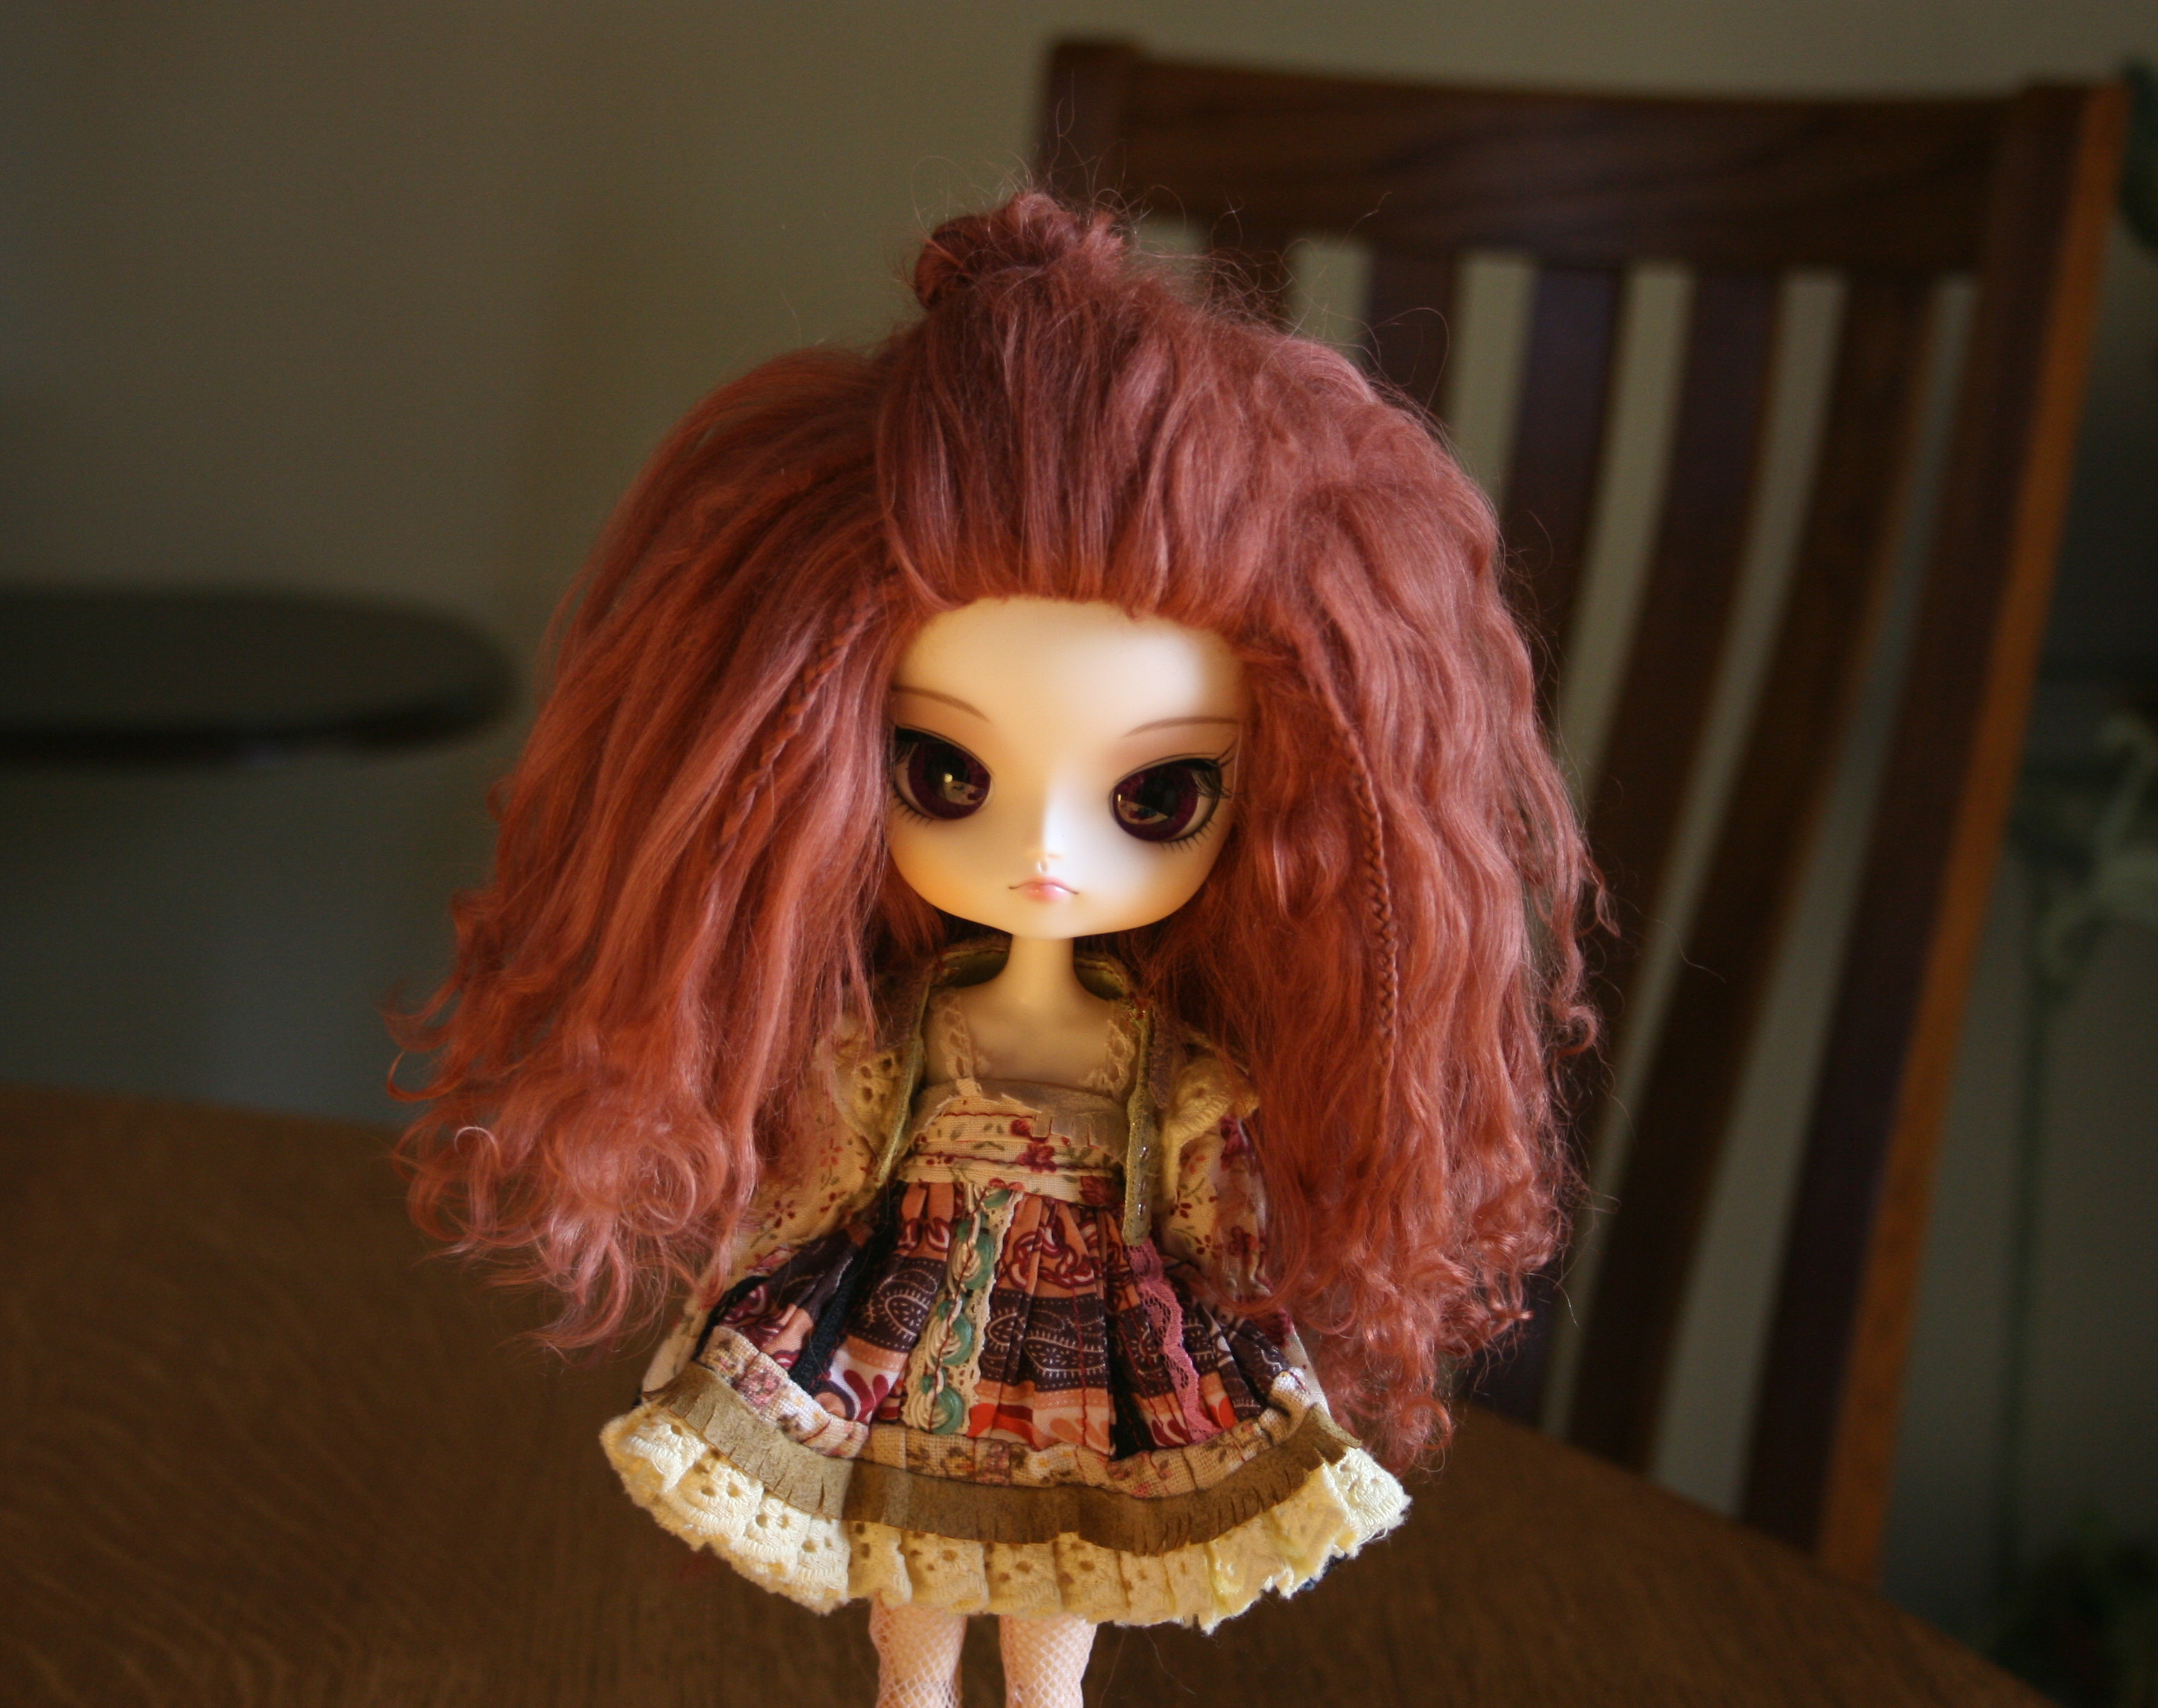 Lizbel is a lovely Dal doll